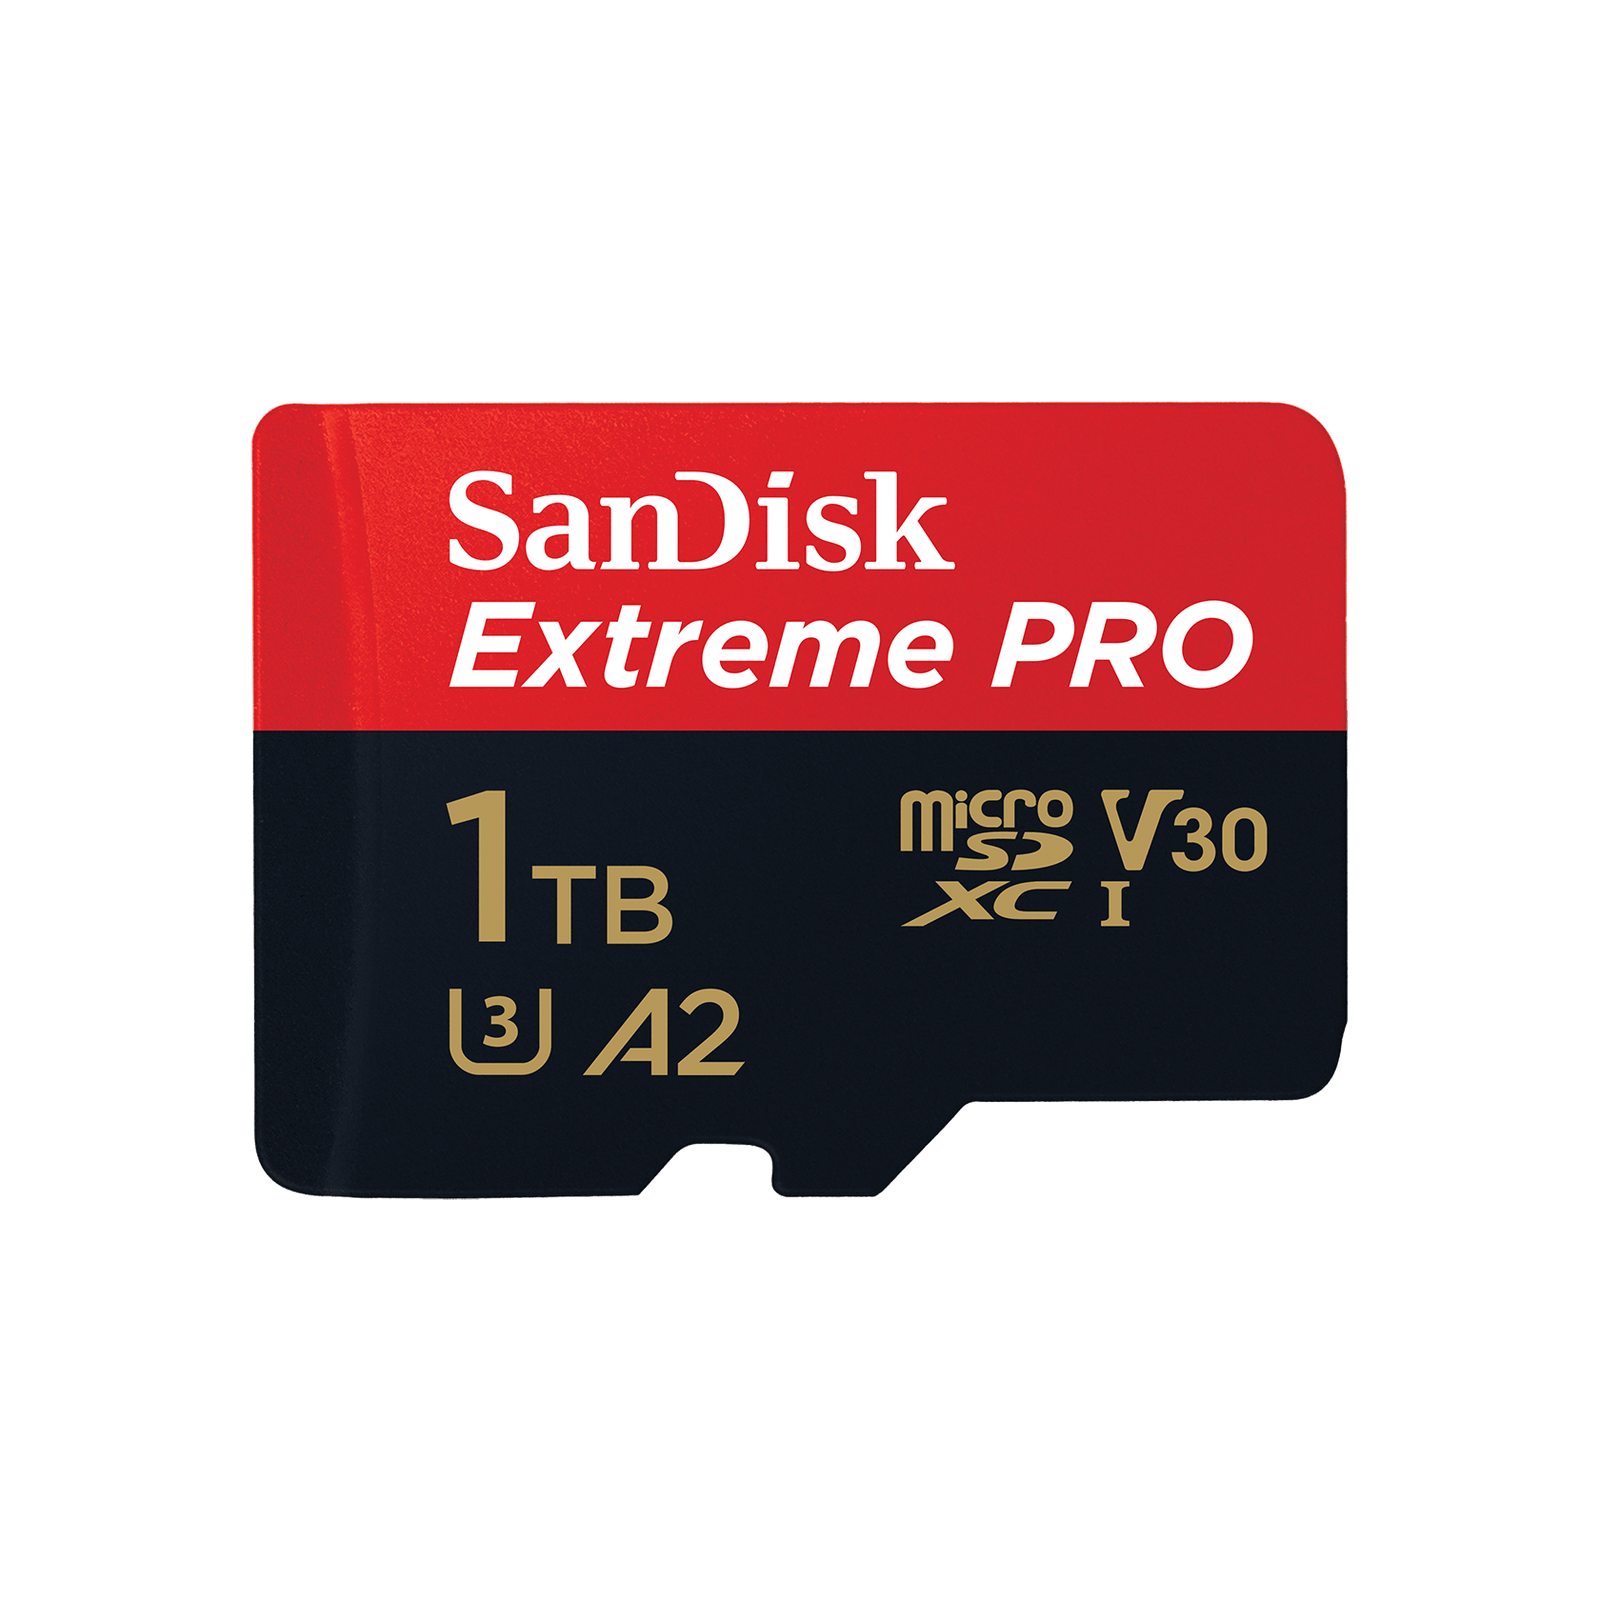 SanDisk Extreme Pro microSDXC 1TB + SD Adapter + Rescue Pro Deluxe